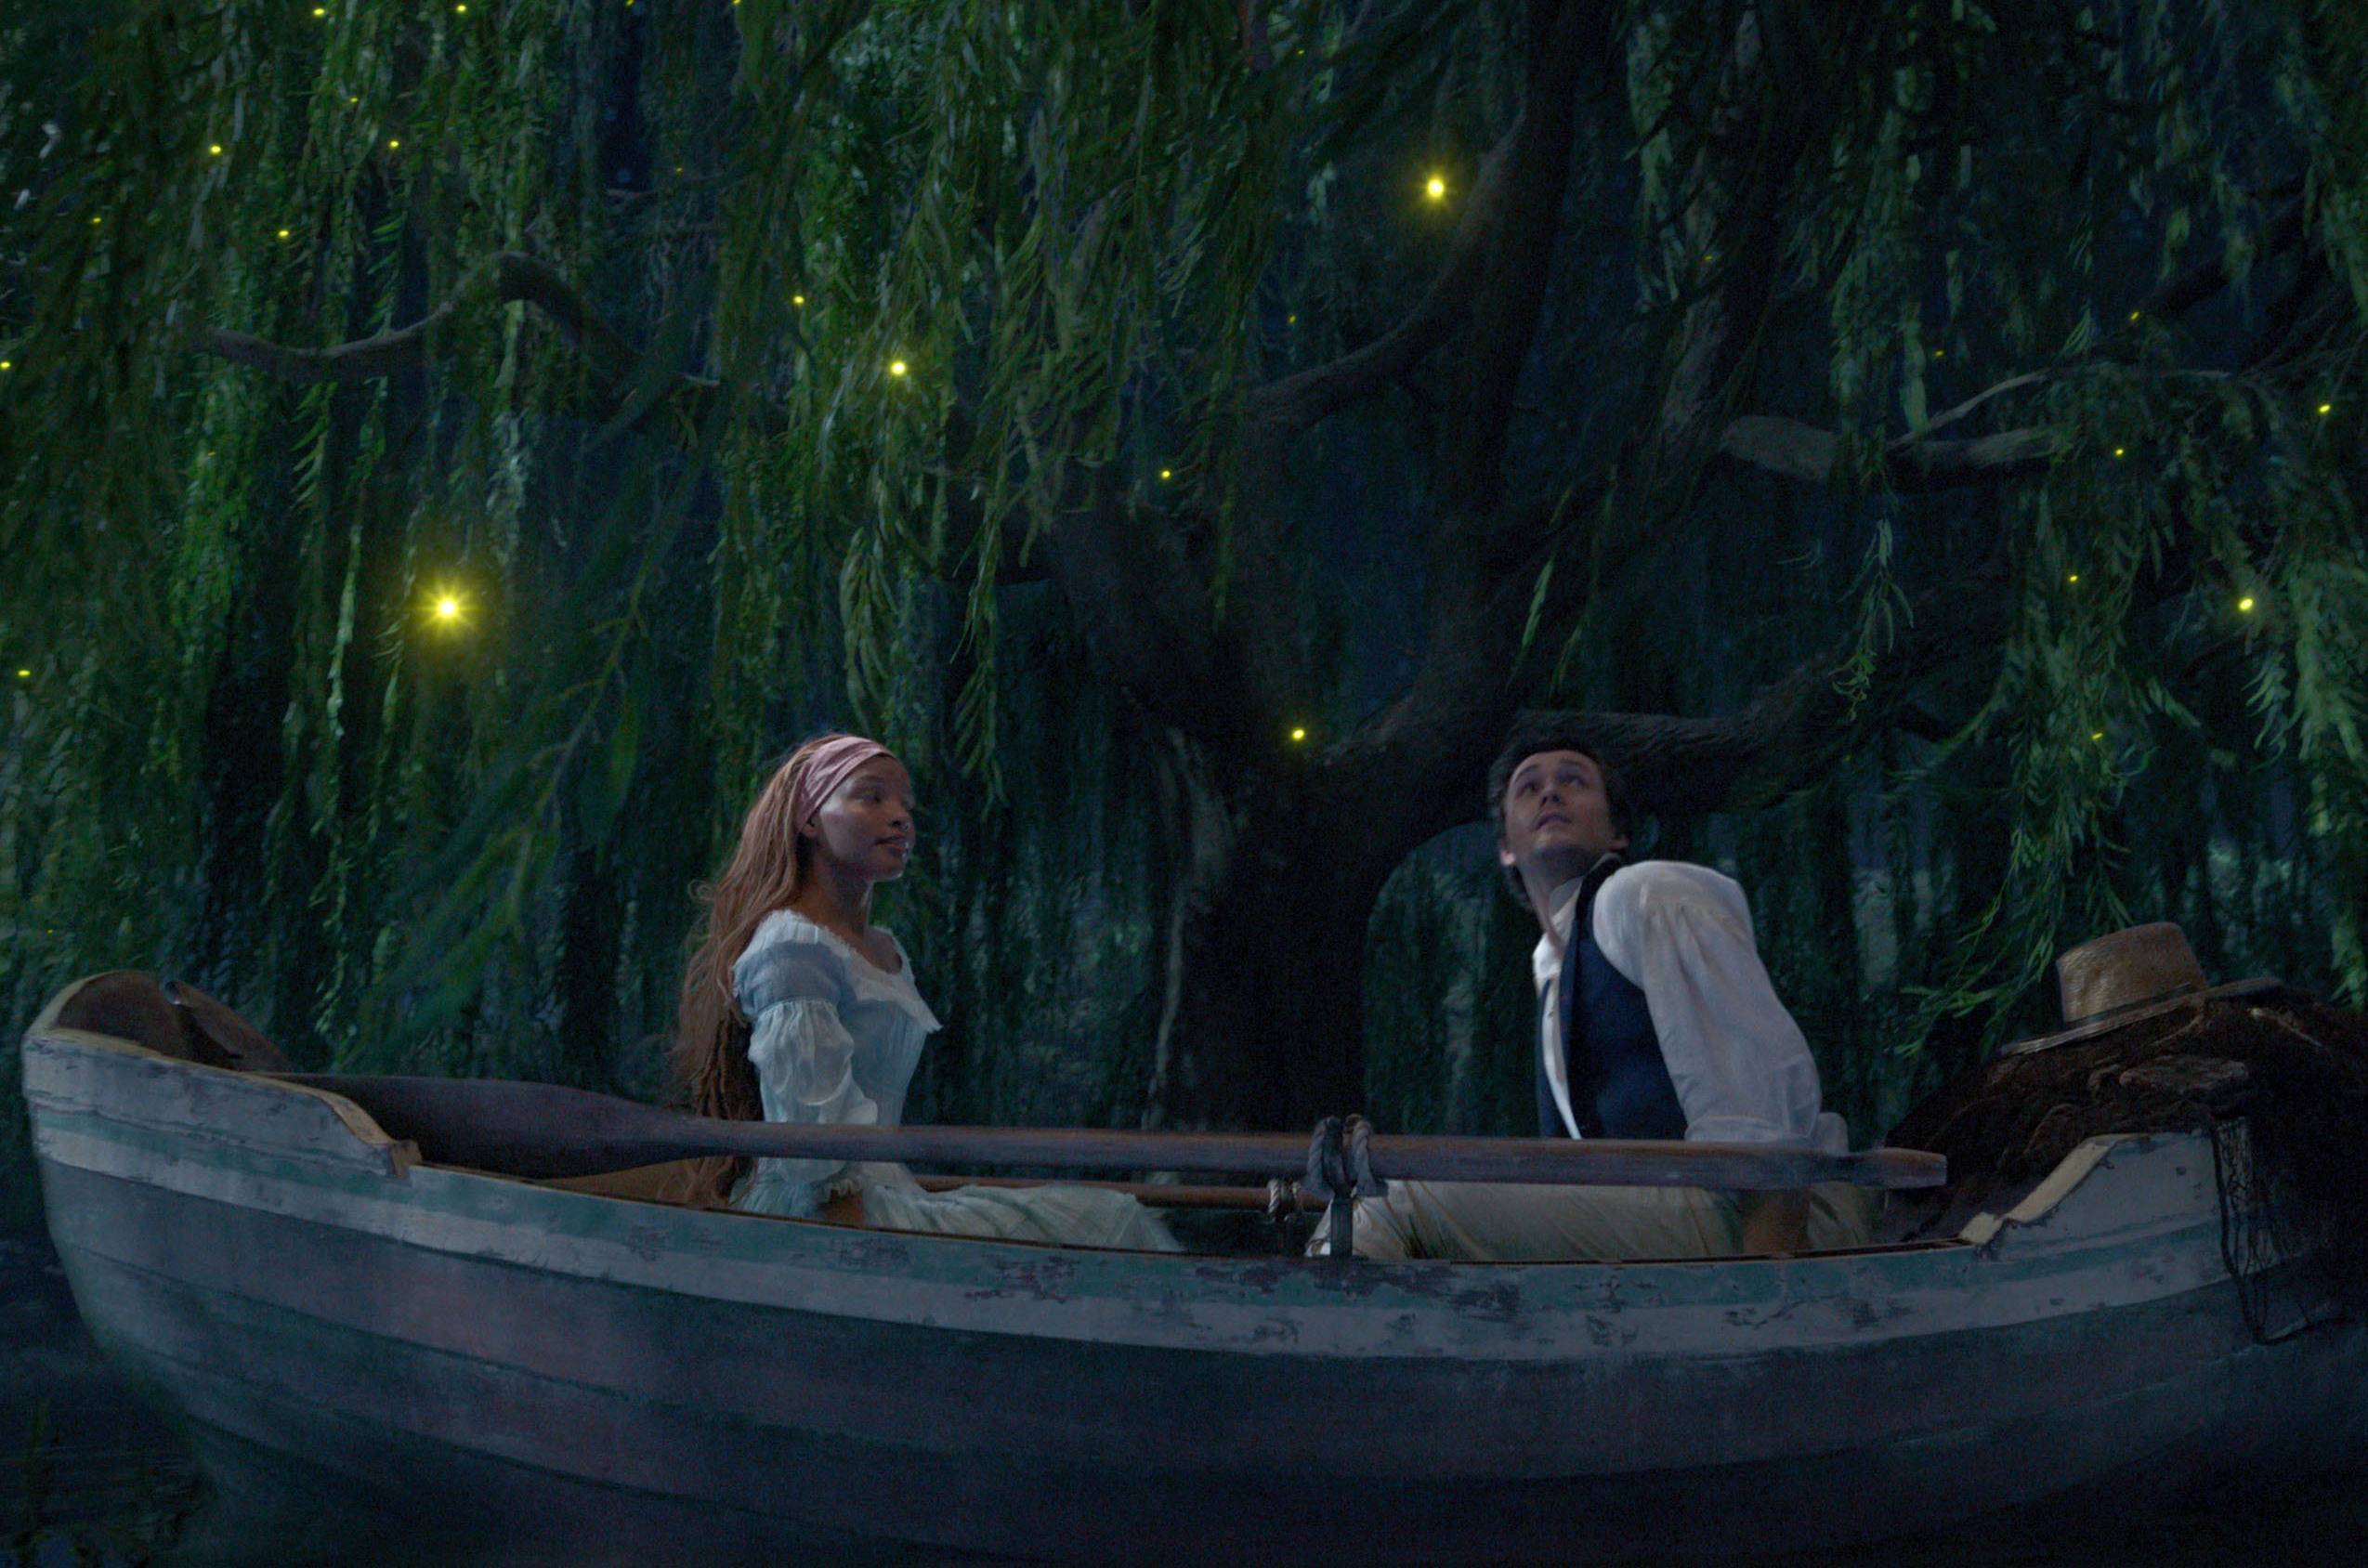 Halle Bailey plays Ariel in Little Mermaid on a boat.